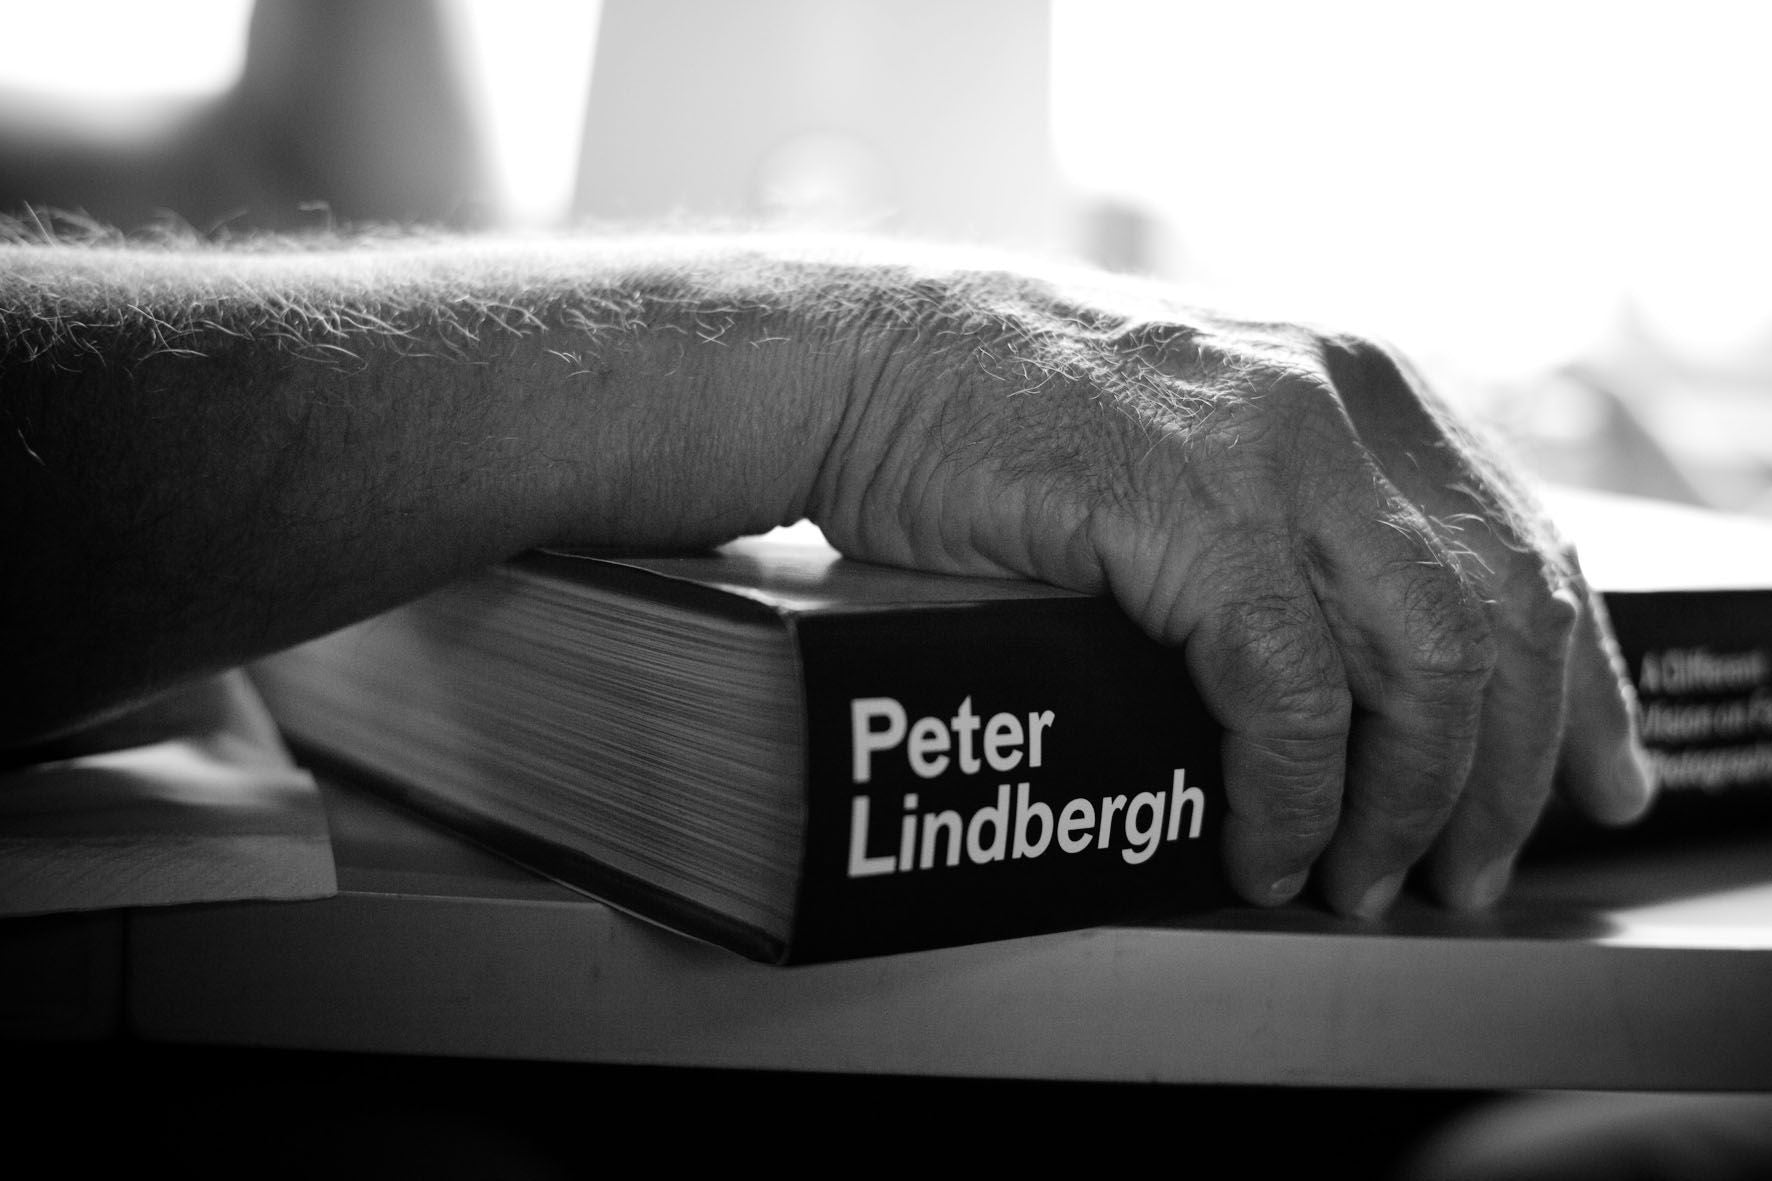 Livre : Peter Lindbergh - on fashion photography - Maison Caldeira